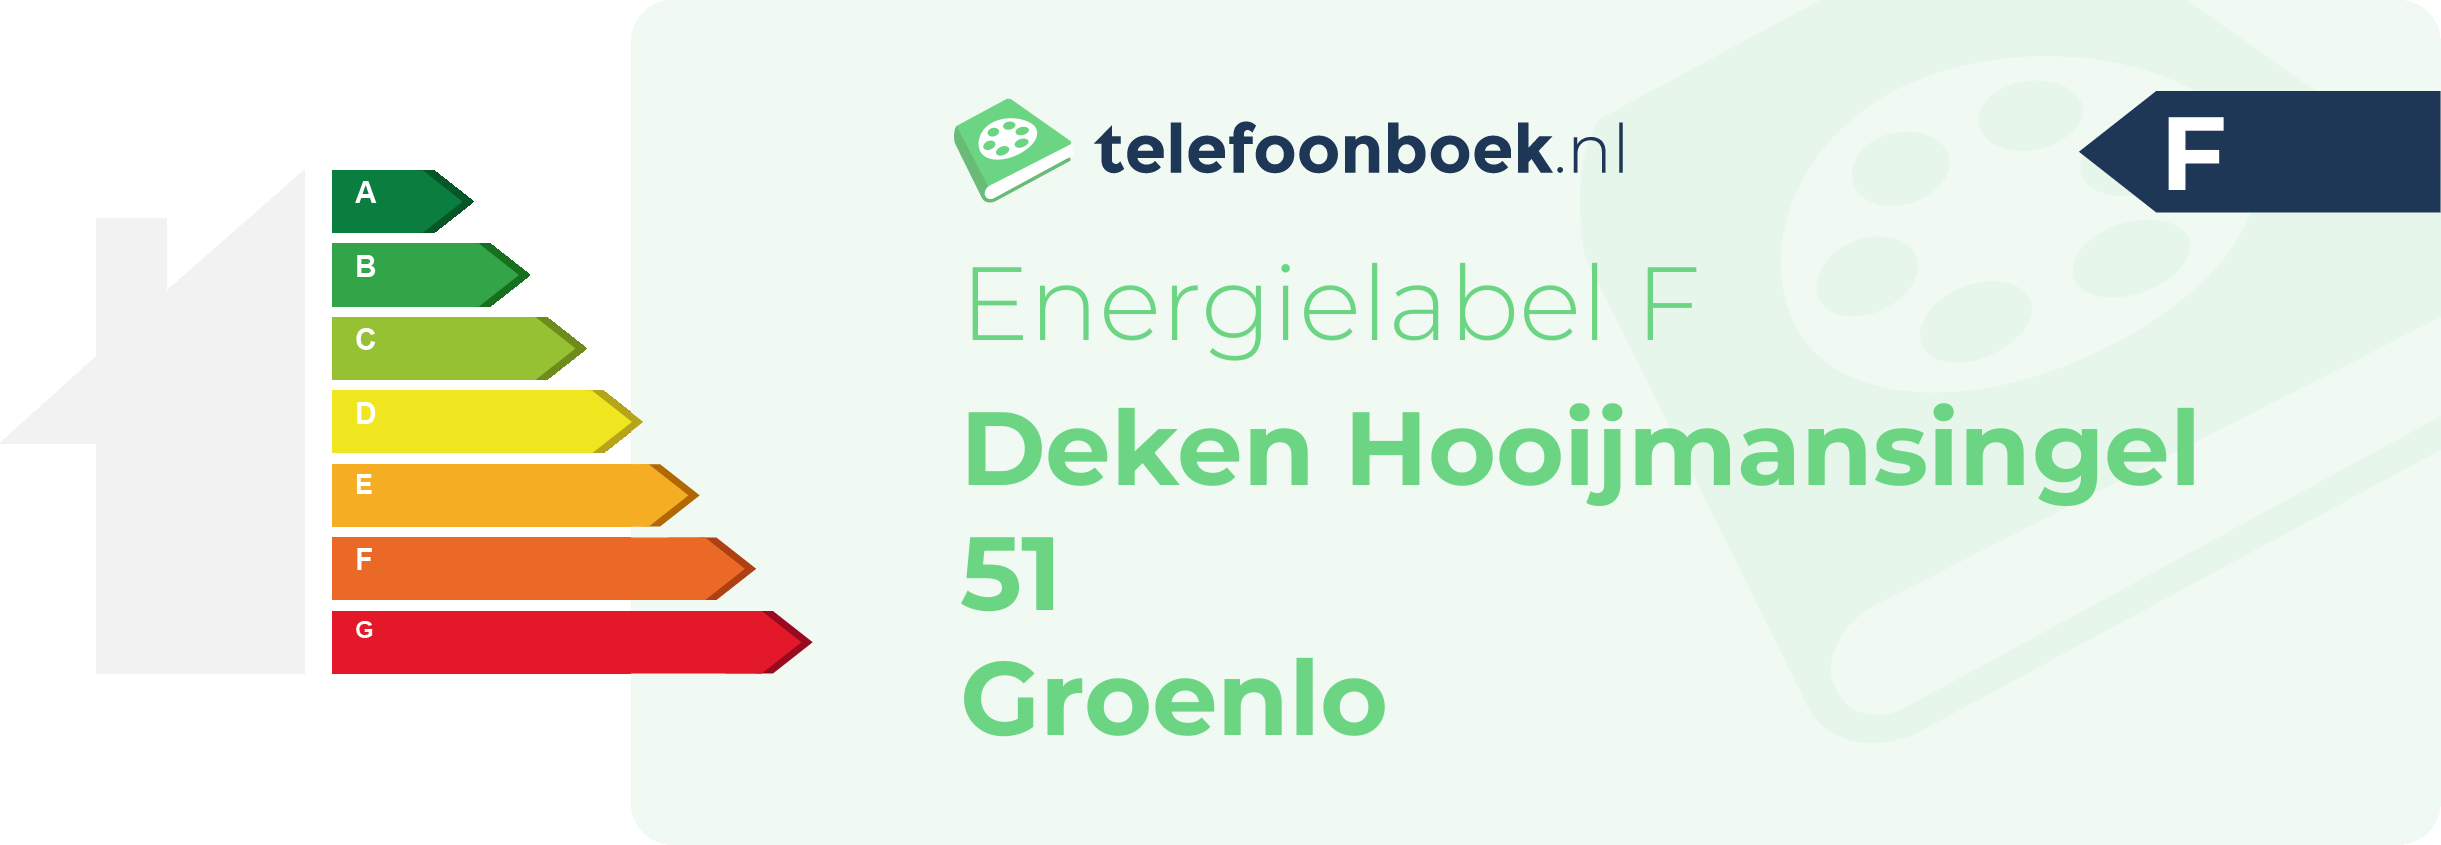 Energielabel Deken Hooijmansingel 51 Groenlo